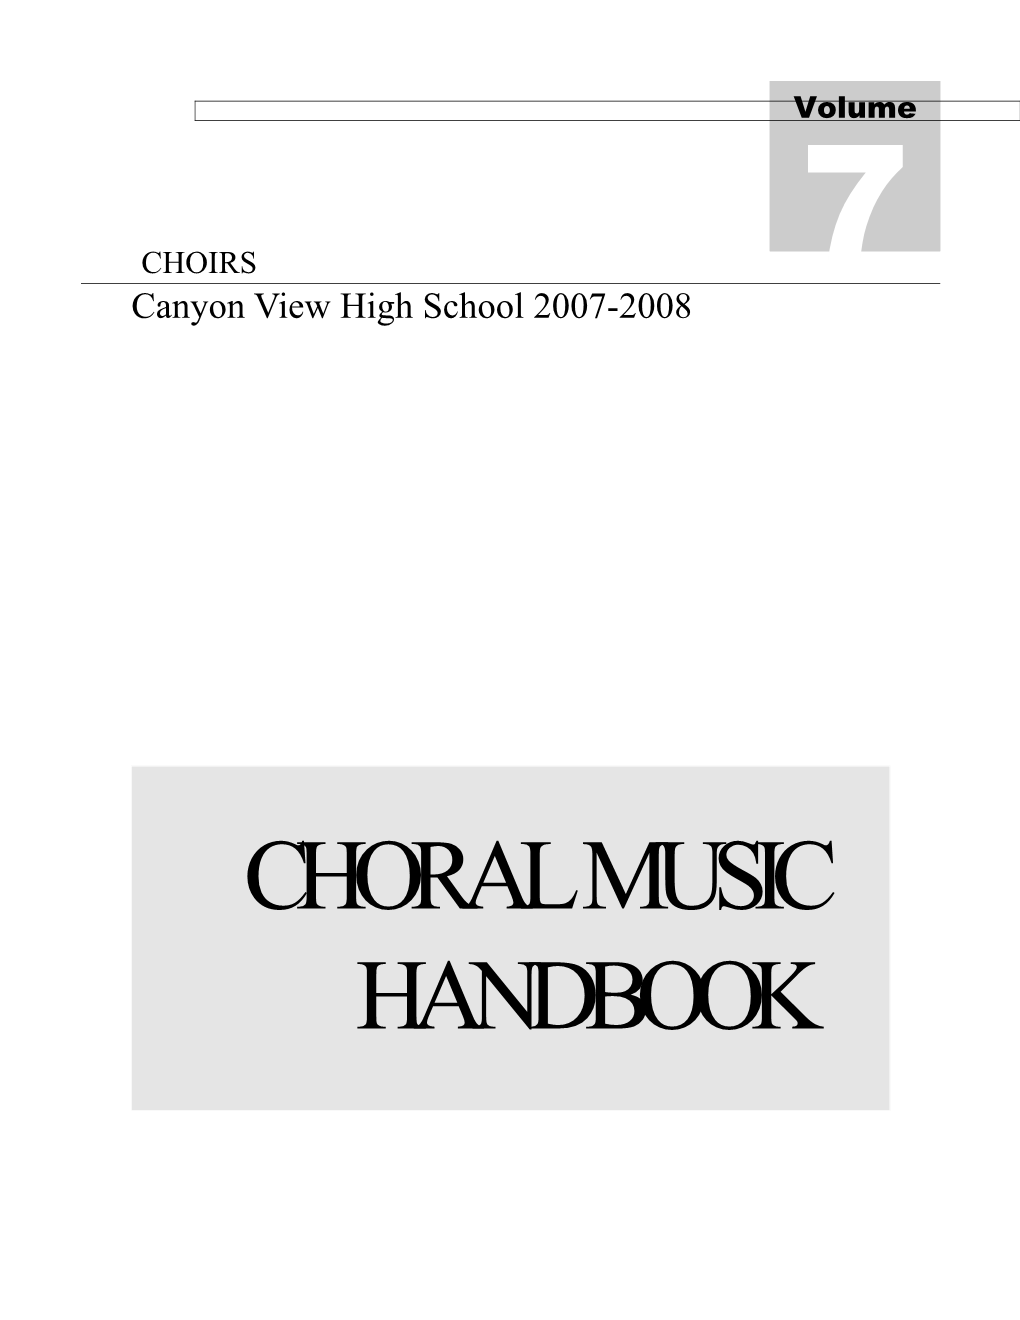 Canyon View High School Choirs